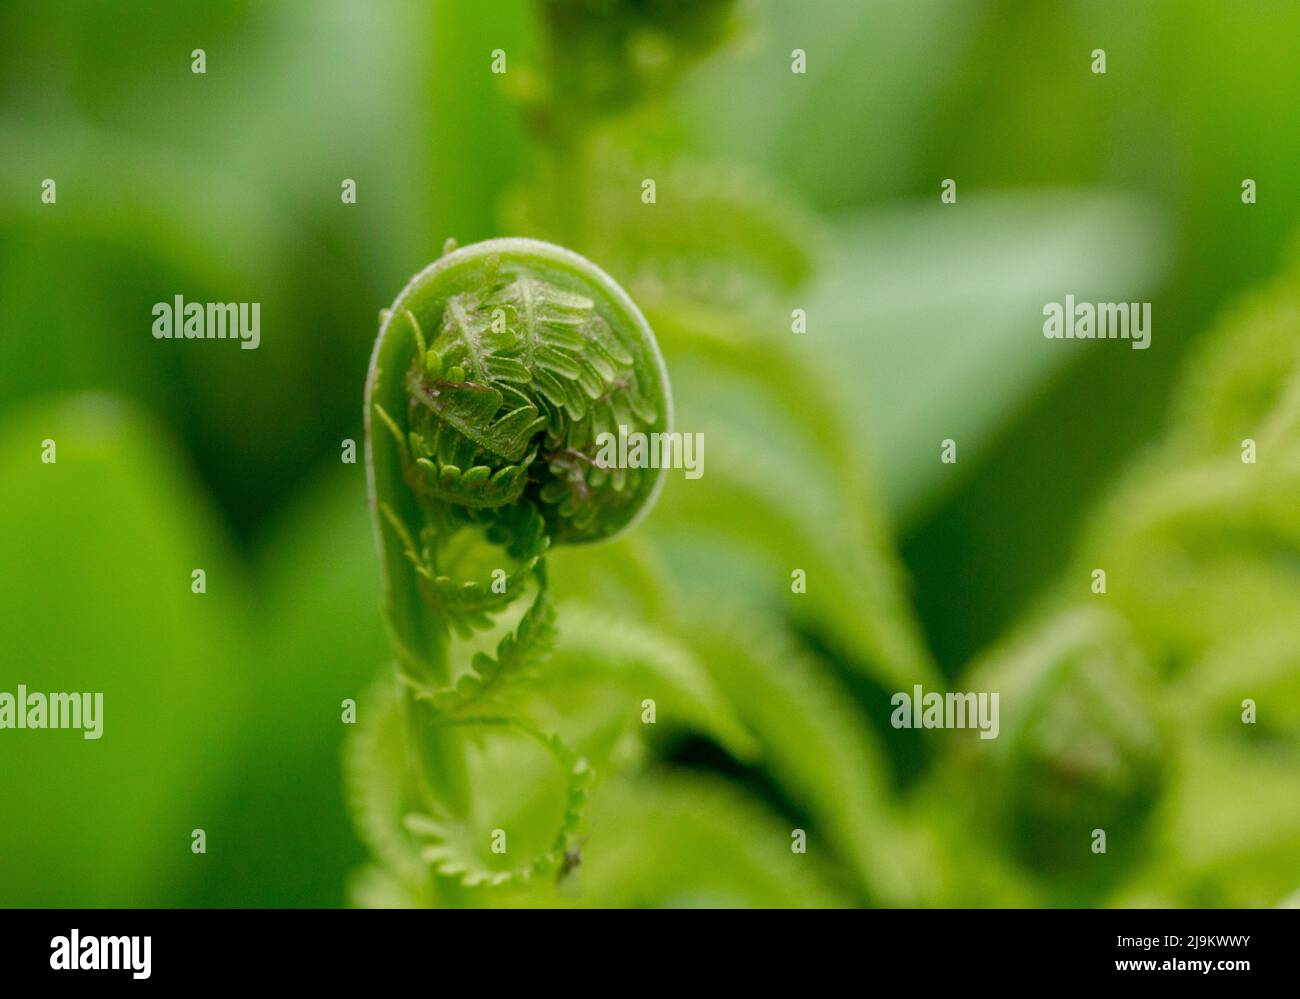 A fern leaf unfurling. Stock Photo